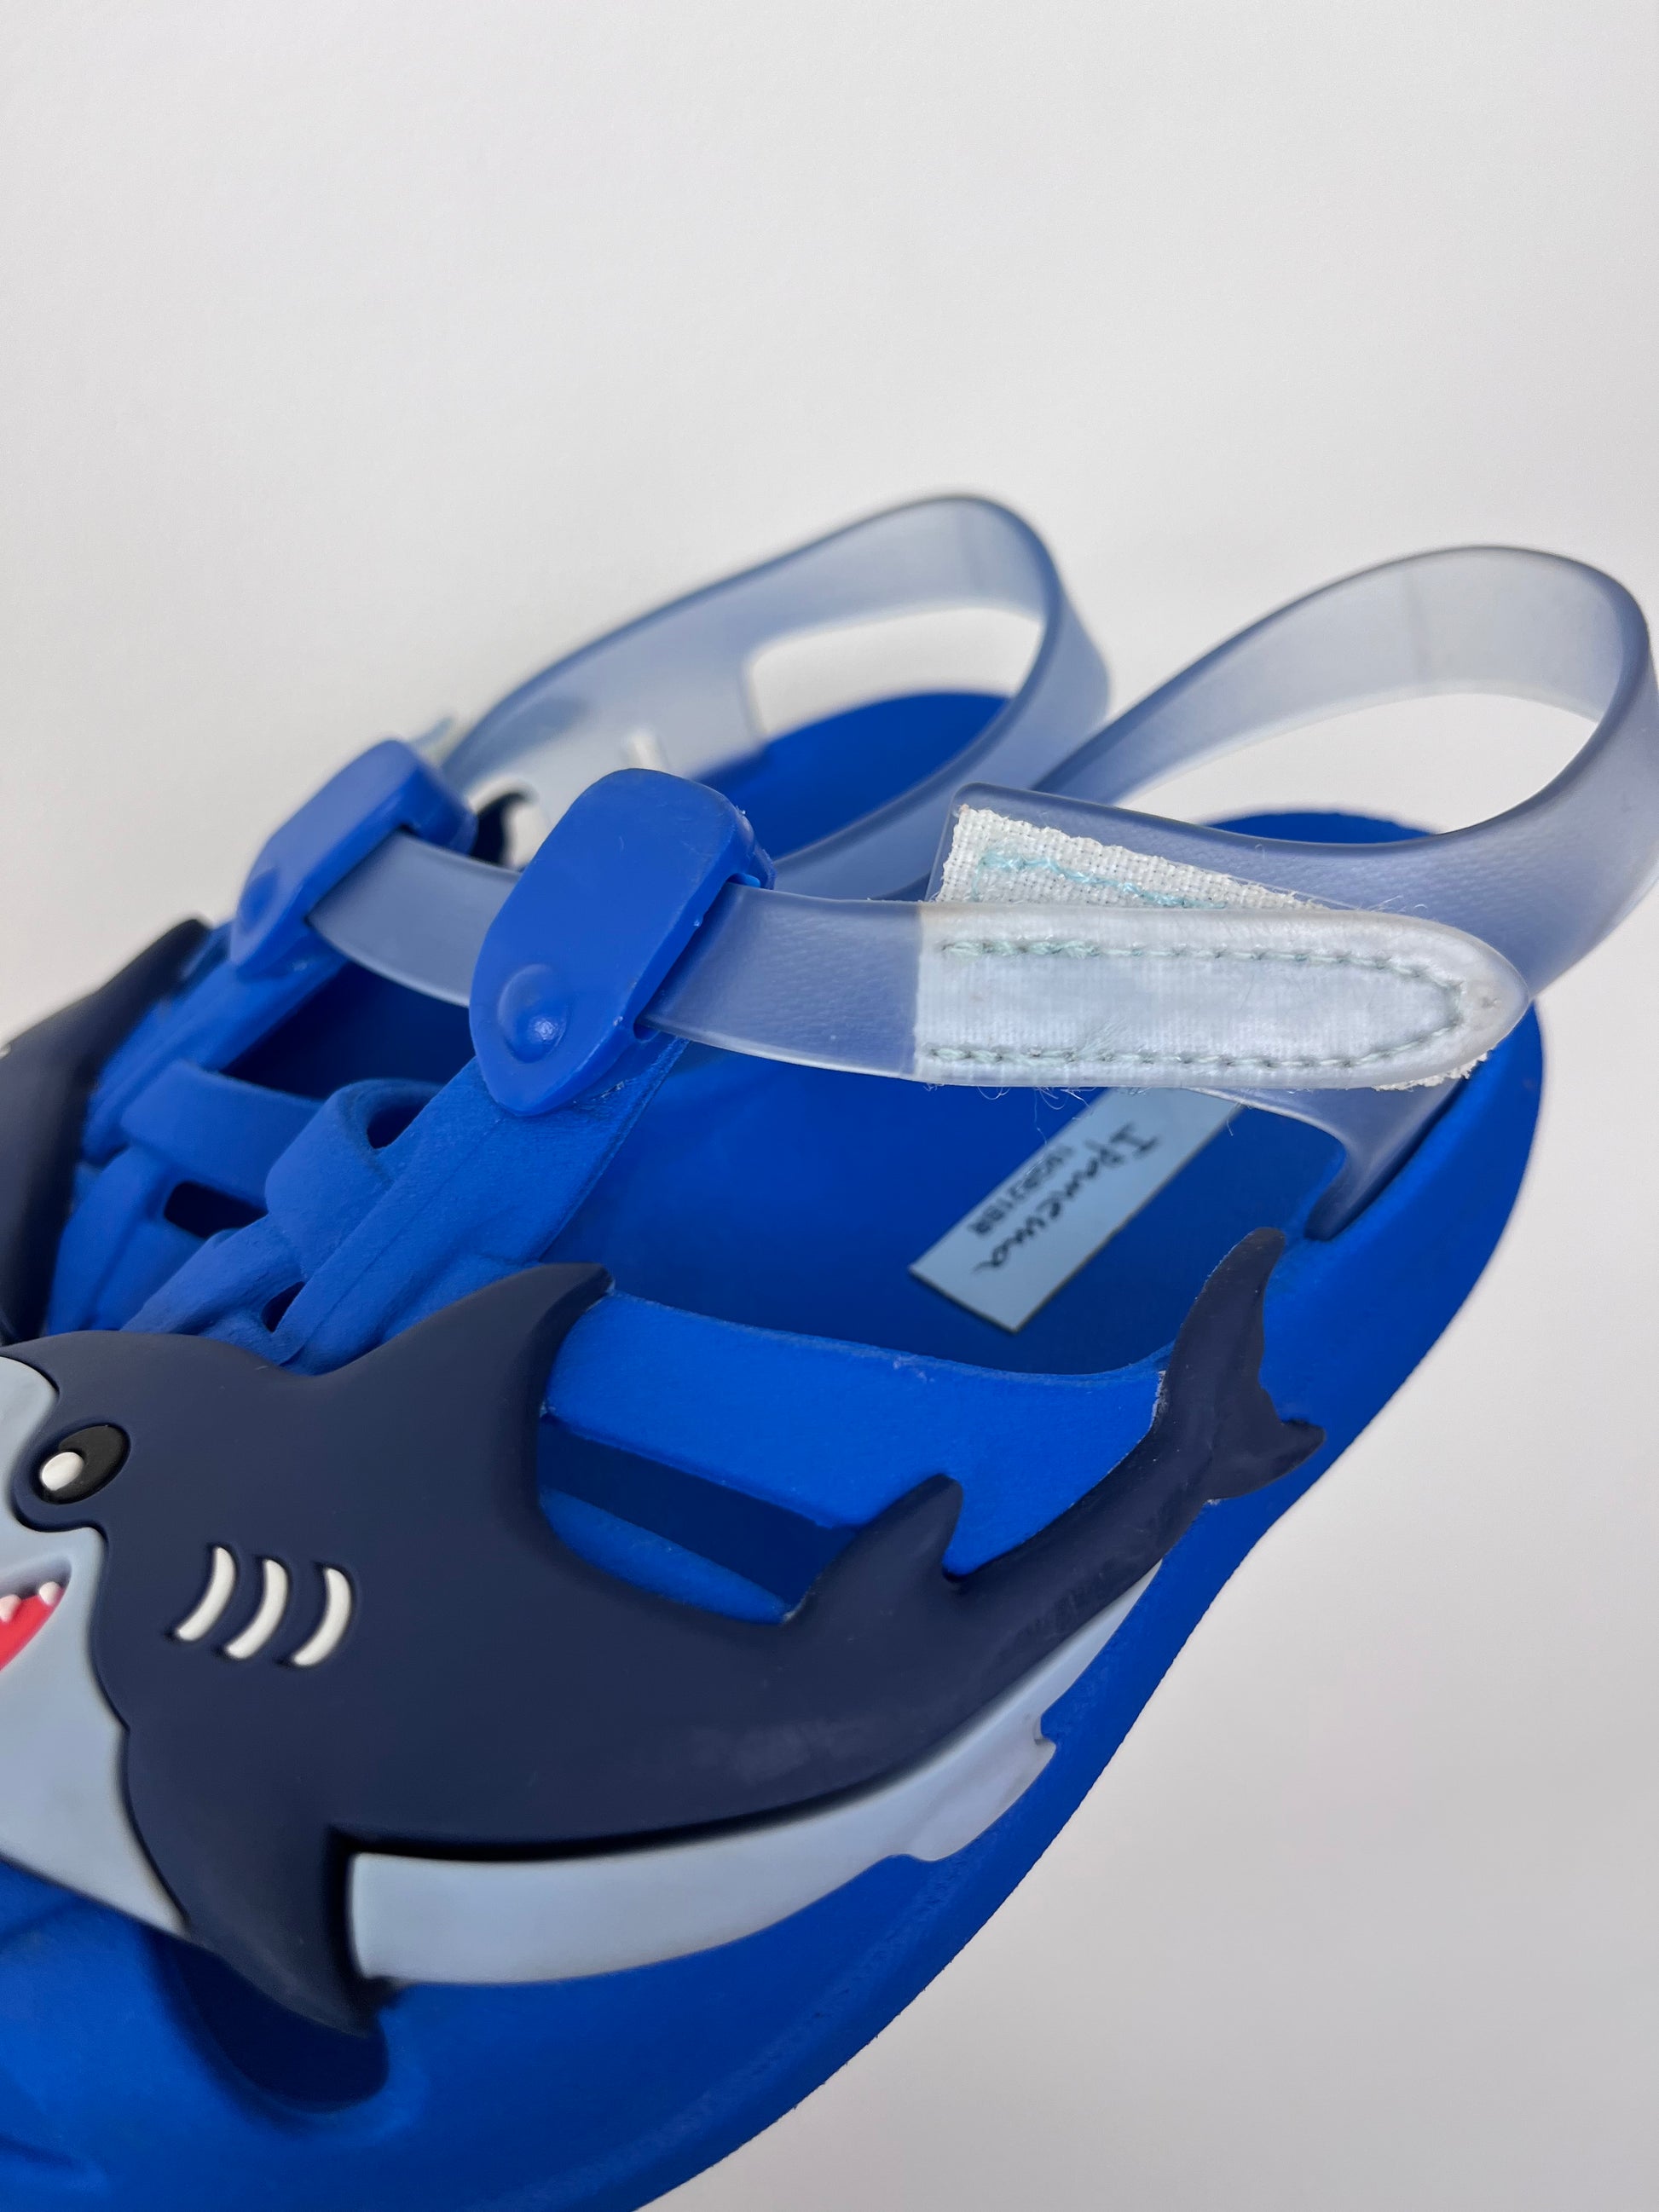 Ipanema UK 9 EU 27-Shoes-Second Snuggle Preloved